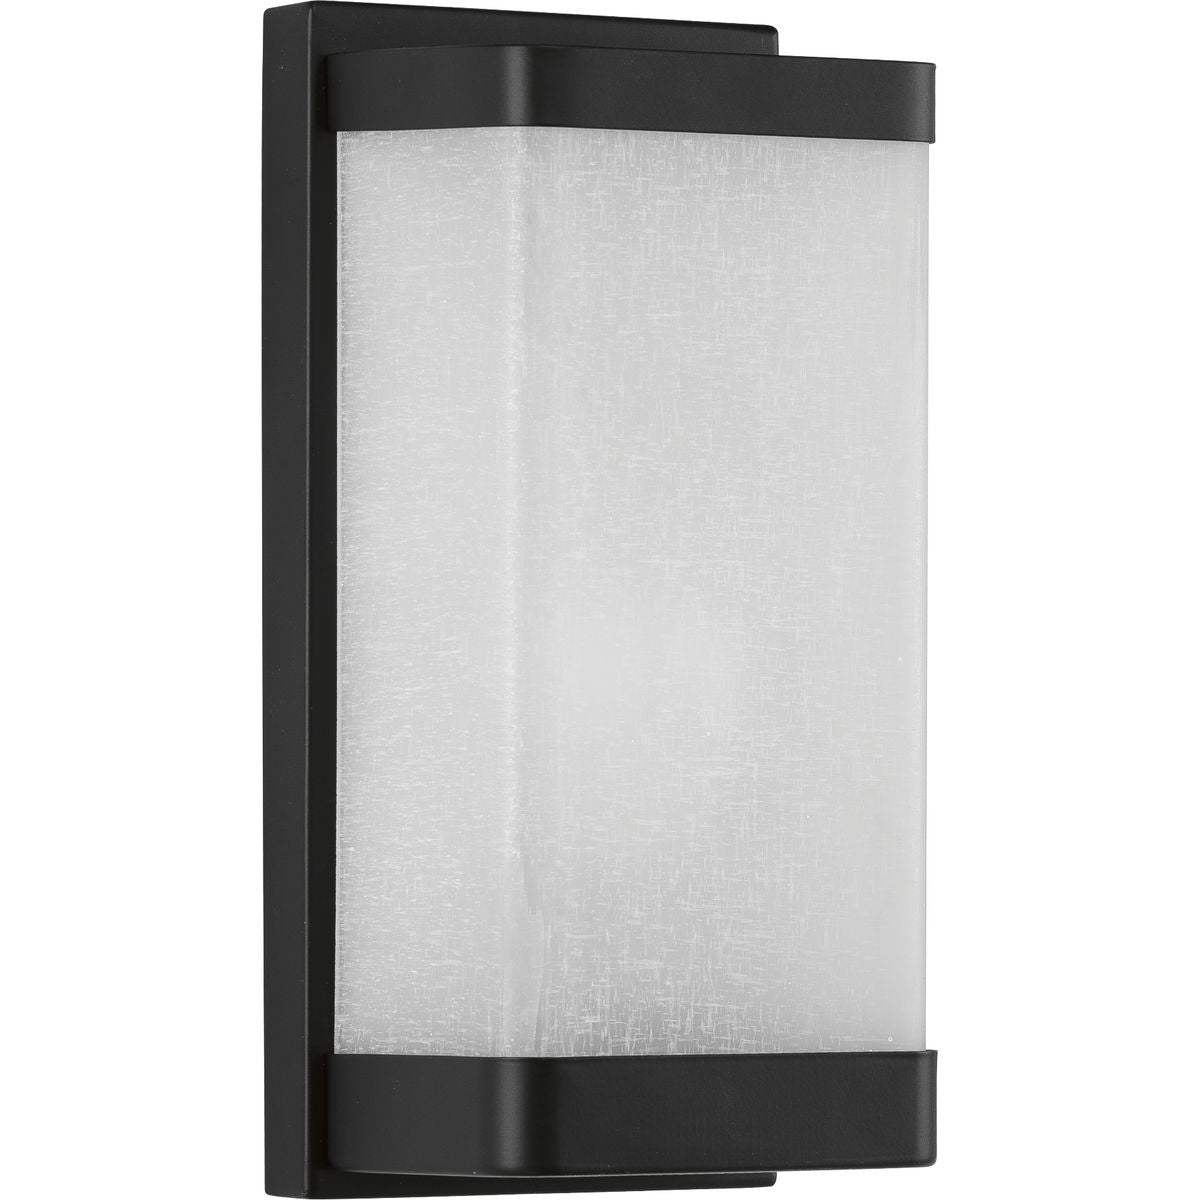 PROGRESS LIGHTING P710072-031 Matte Black One-Light Linen Glass Wall Sconce